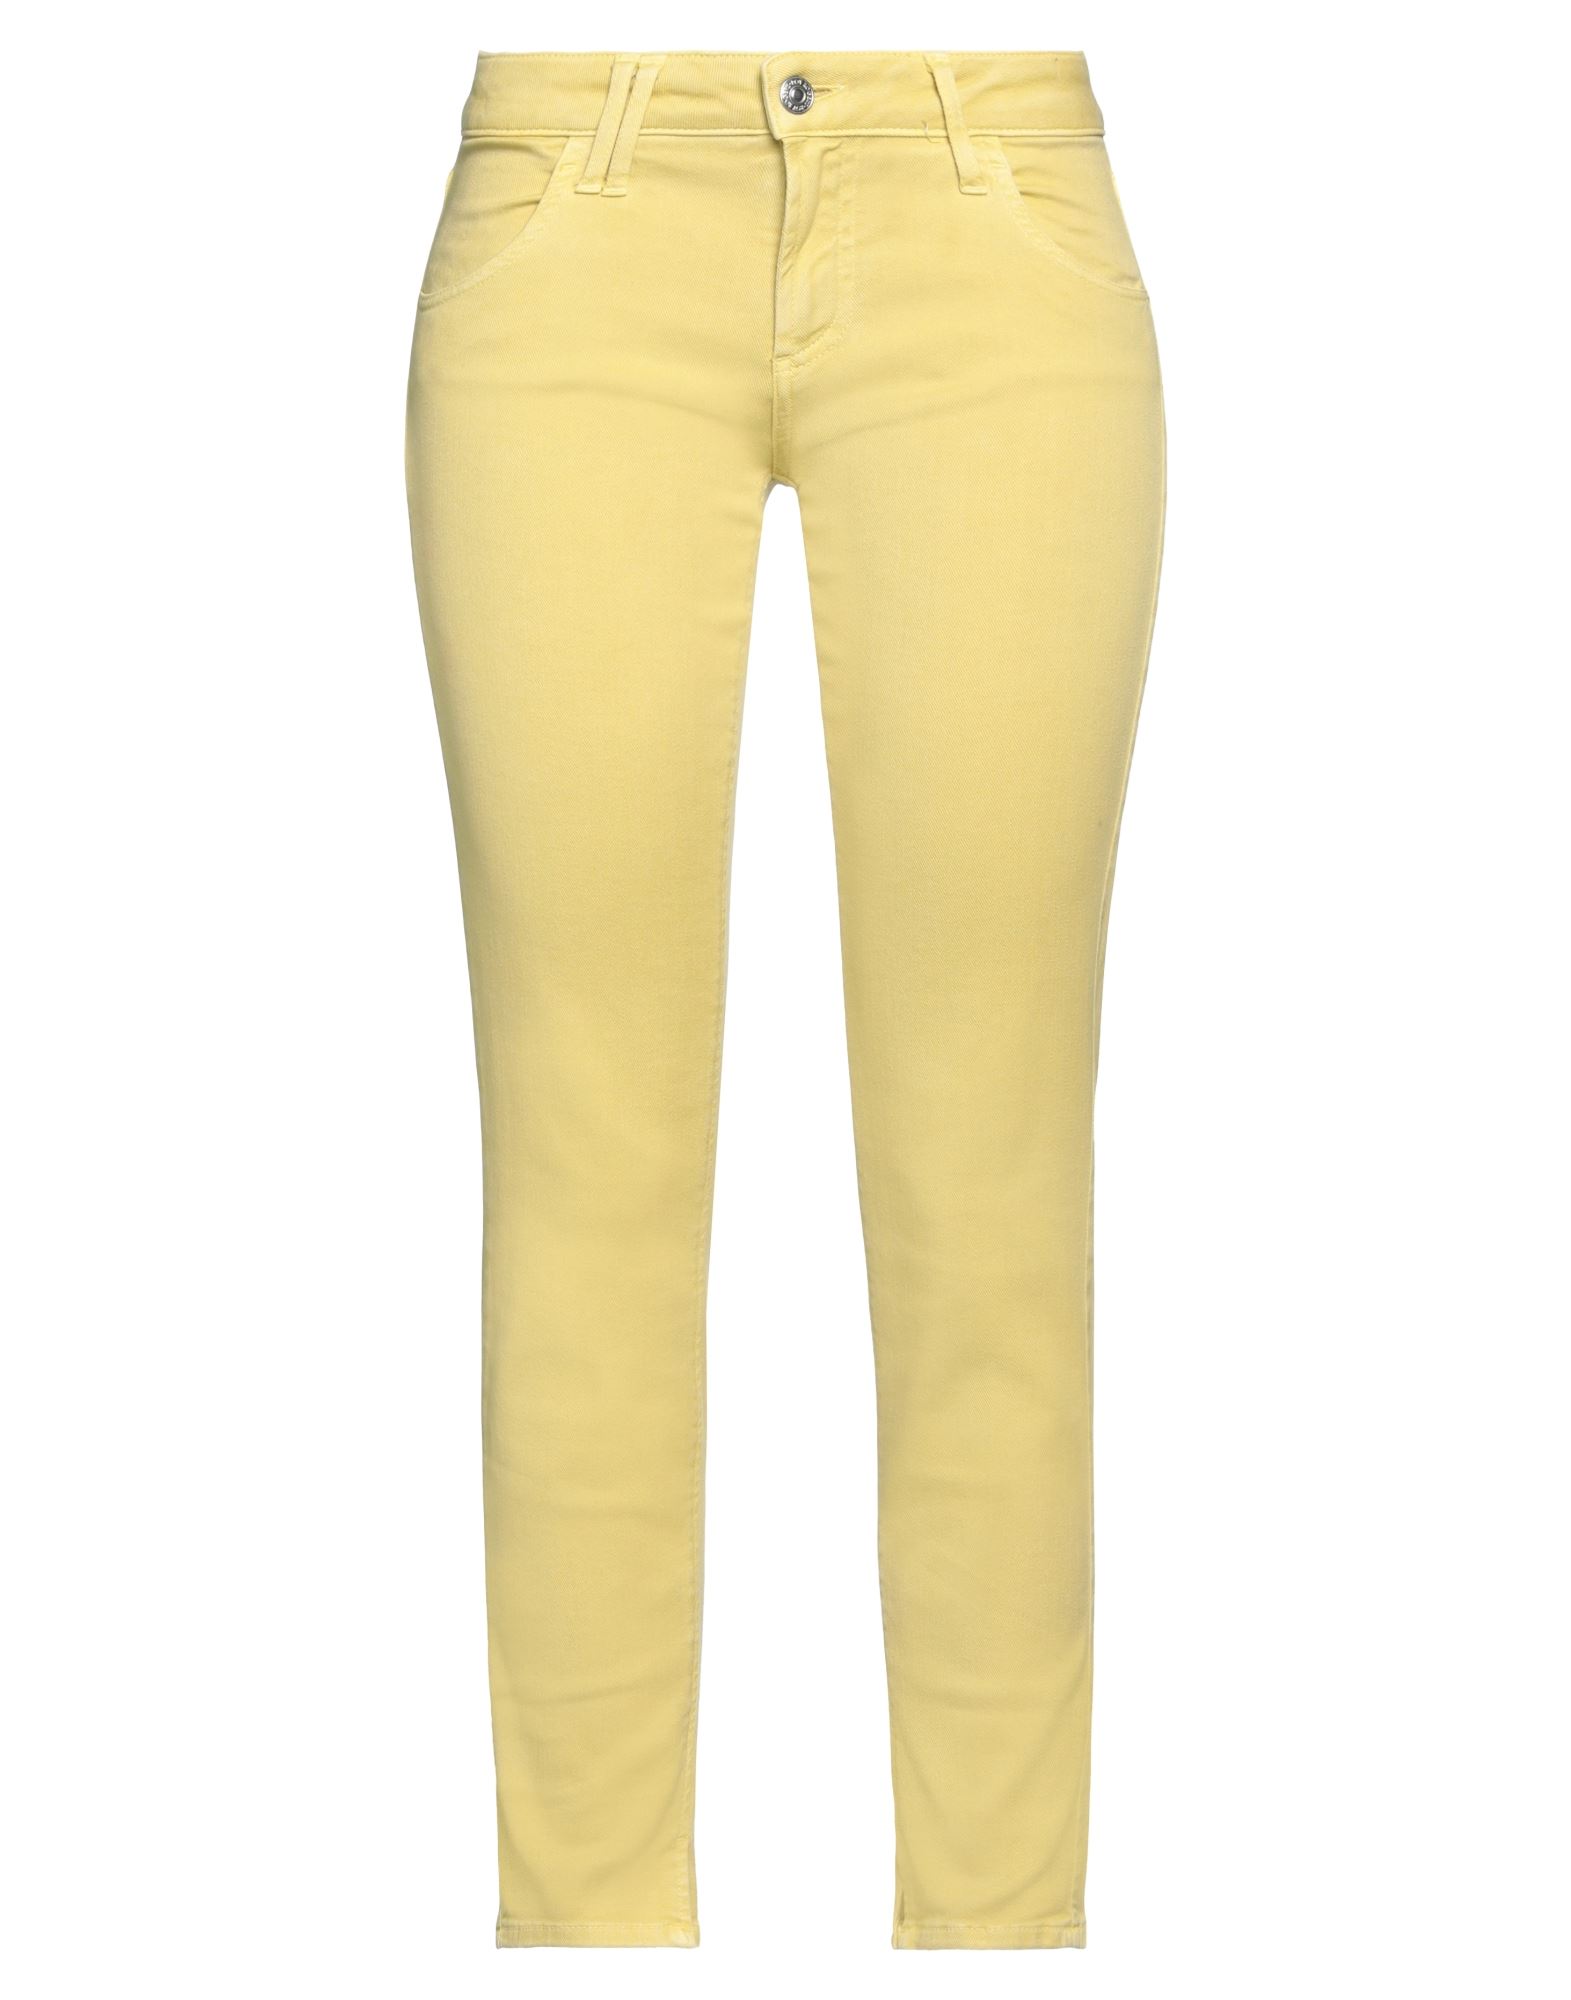 ROŸ ROGER'S Jeanshose Damen Gelb von ROŸ ROGER'S